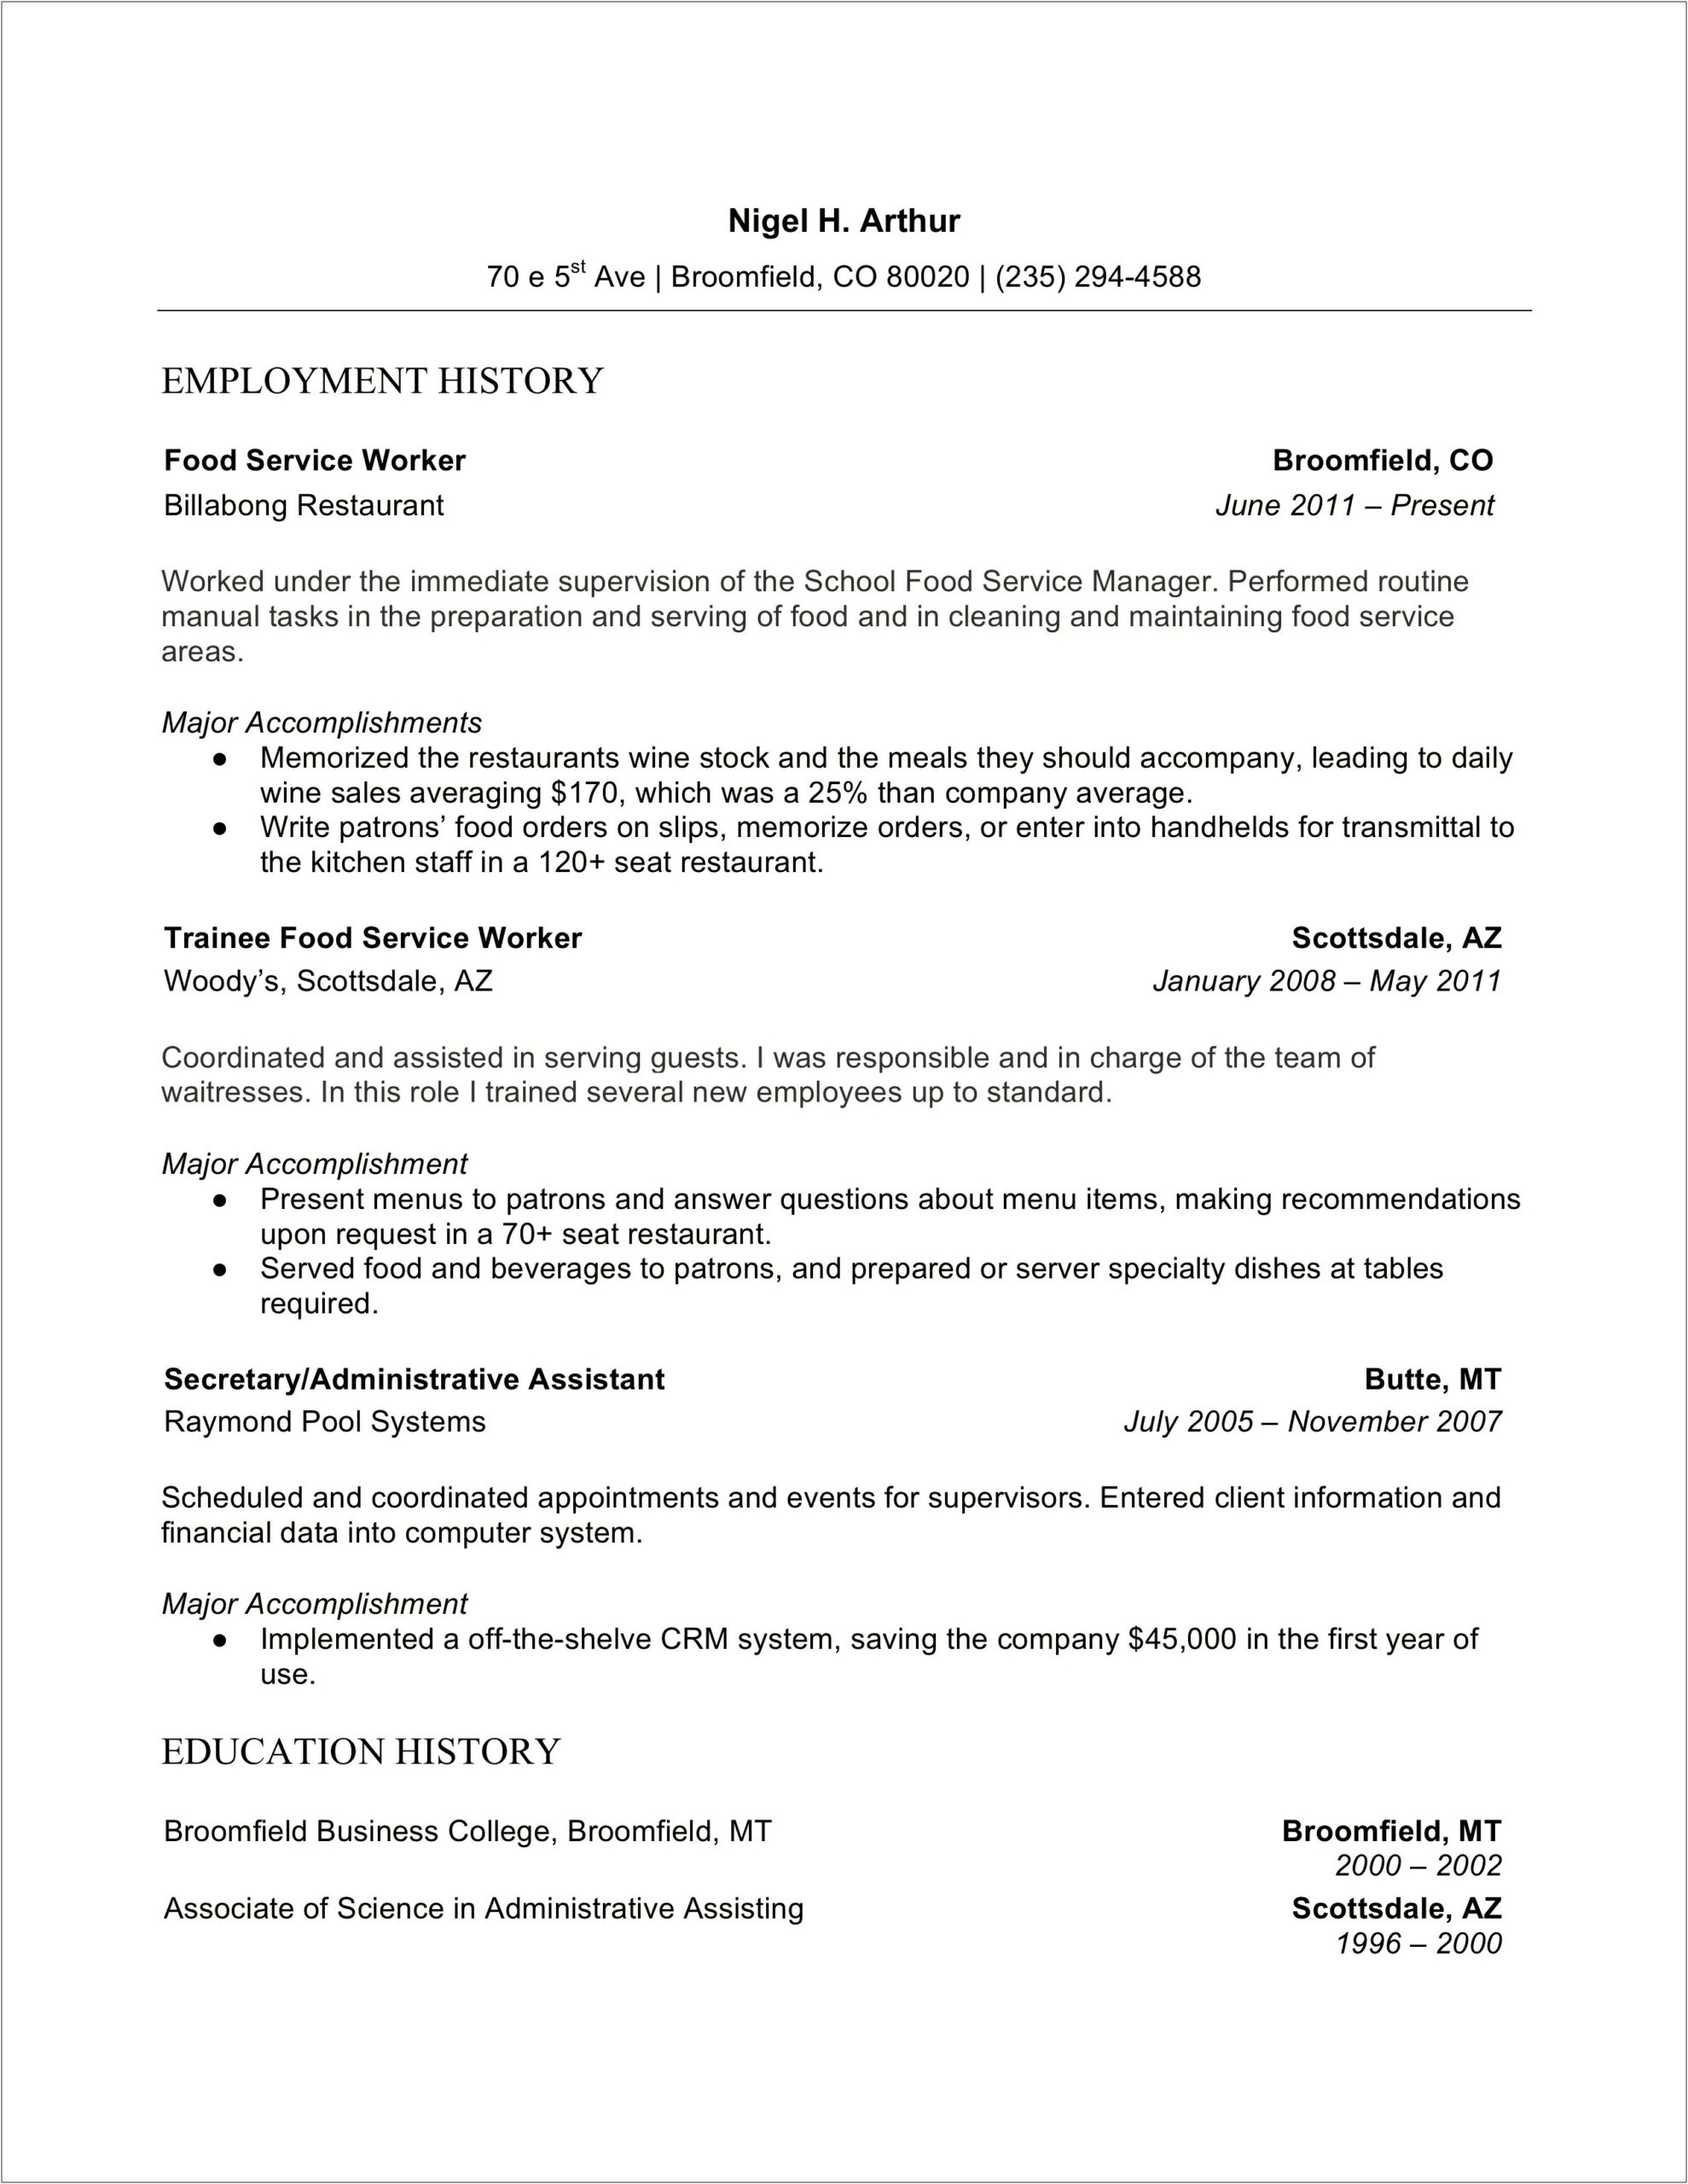 Resume Format Ms Word 2007 Download